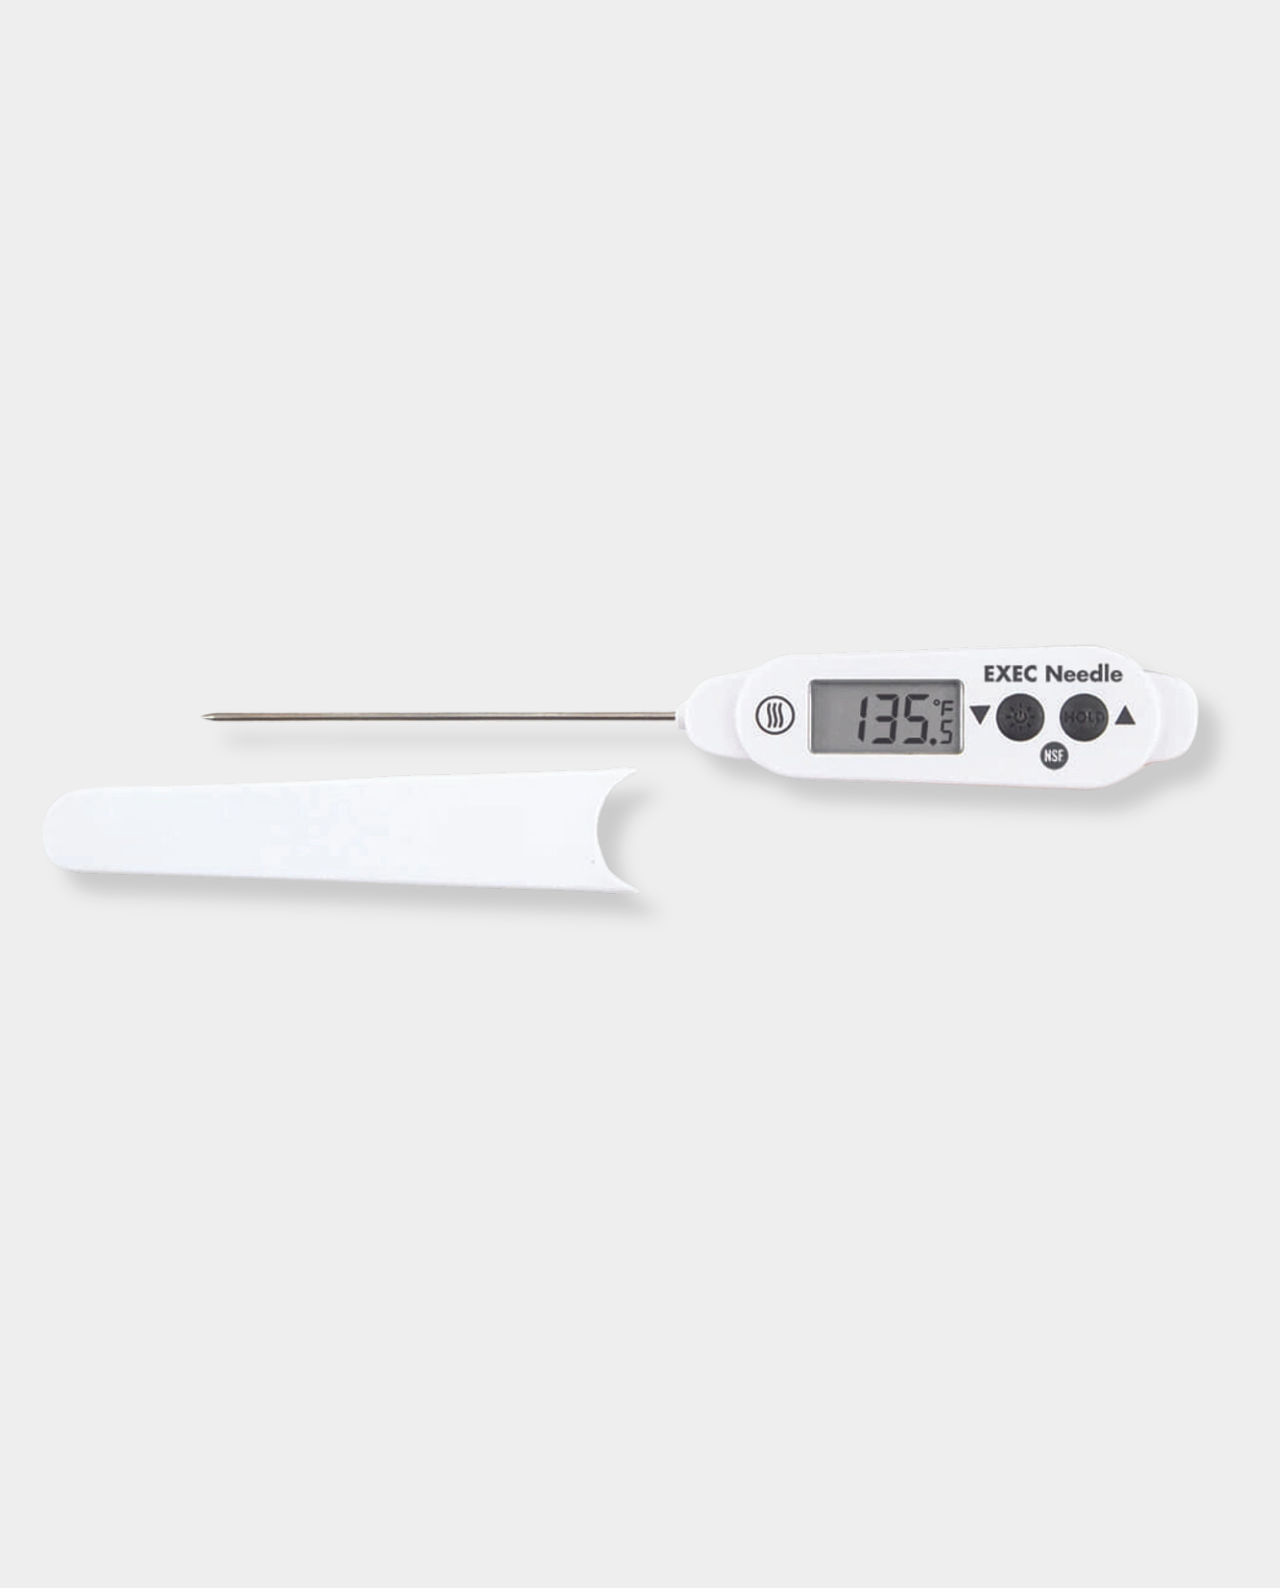 Choice 3 Digital Pocket Probe Thermometer